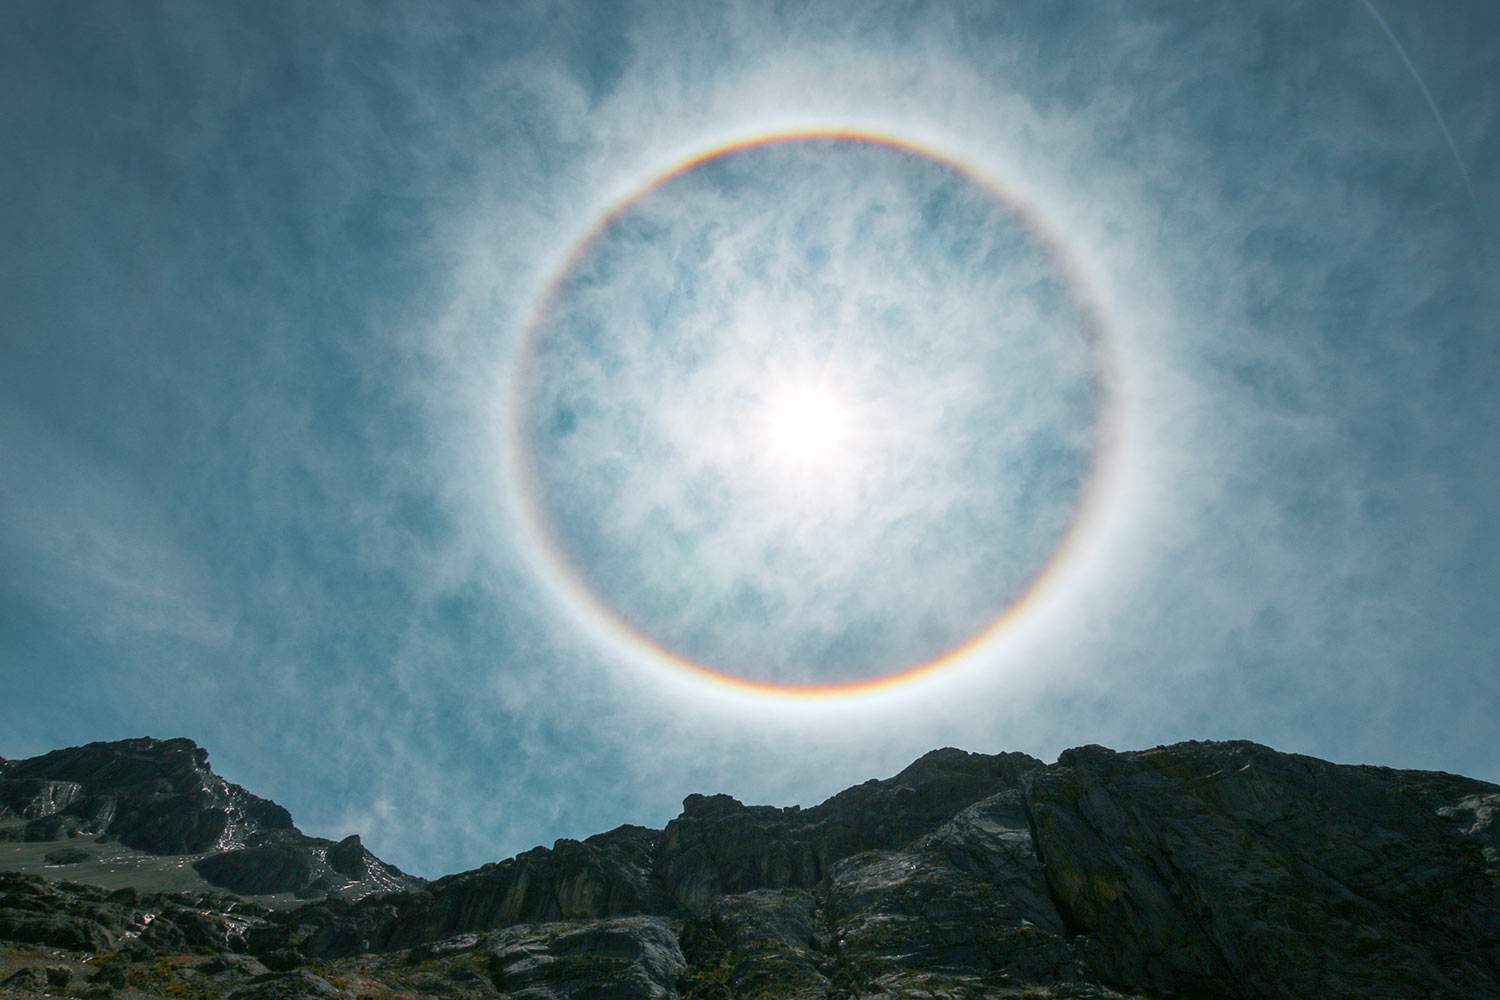 Halo circulaire du soleil, Cordillera Huayhuash, Pérou / Circular halo by sun, Cordillera Huayhuash, Peru